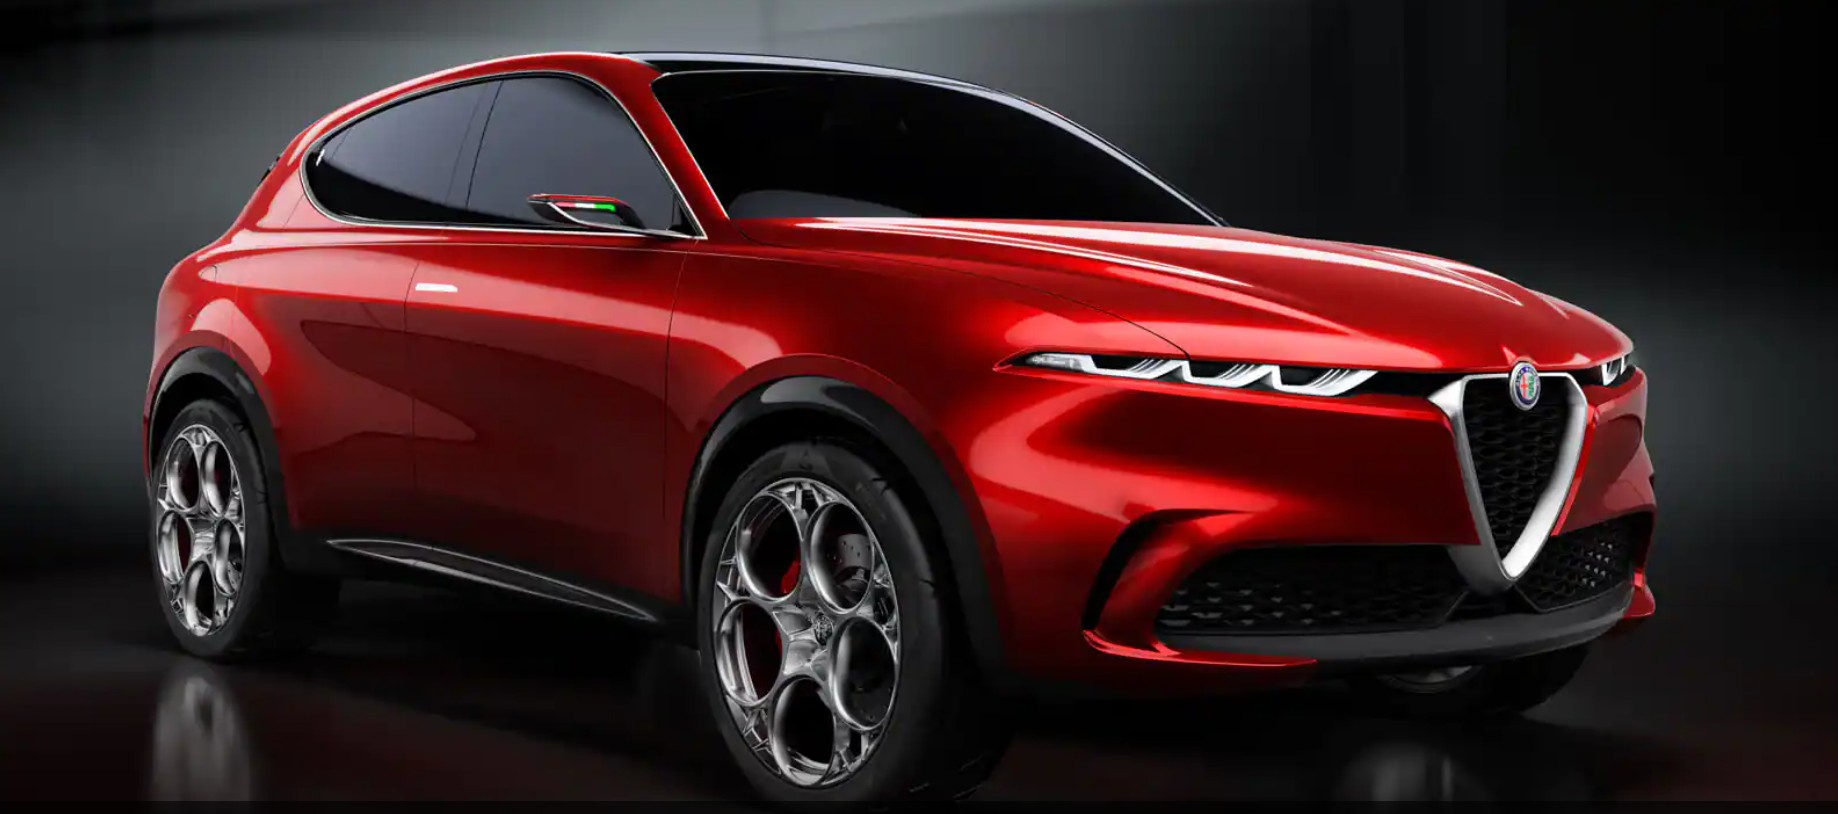 Alfa Romeo plans to build an EV SUV to rival BMW iX Mercedes EQS